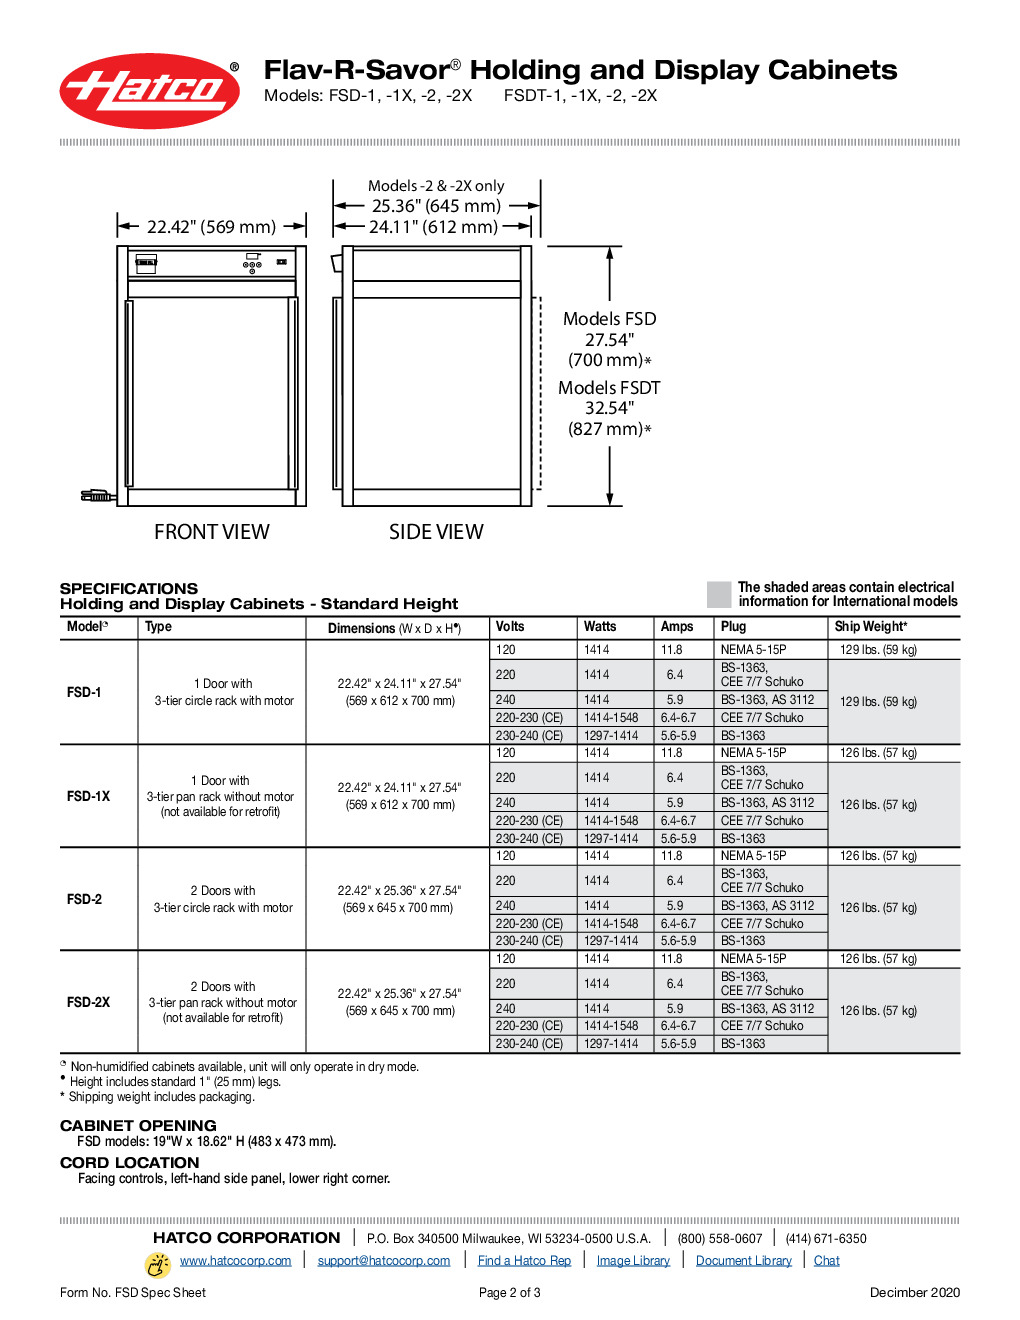 Hatco FSDT-1-120-QS Countertop Hot Food Display Case